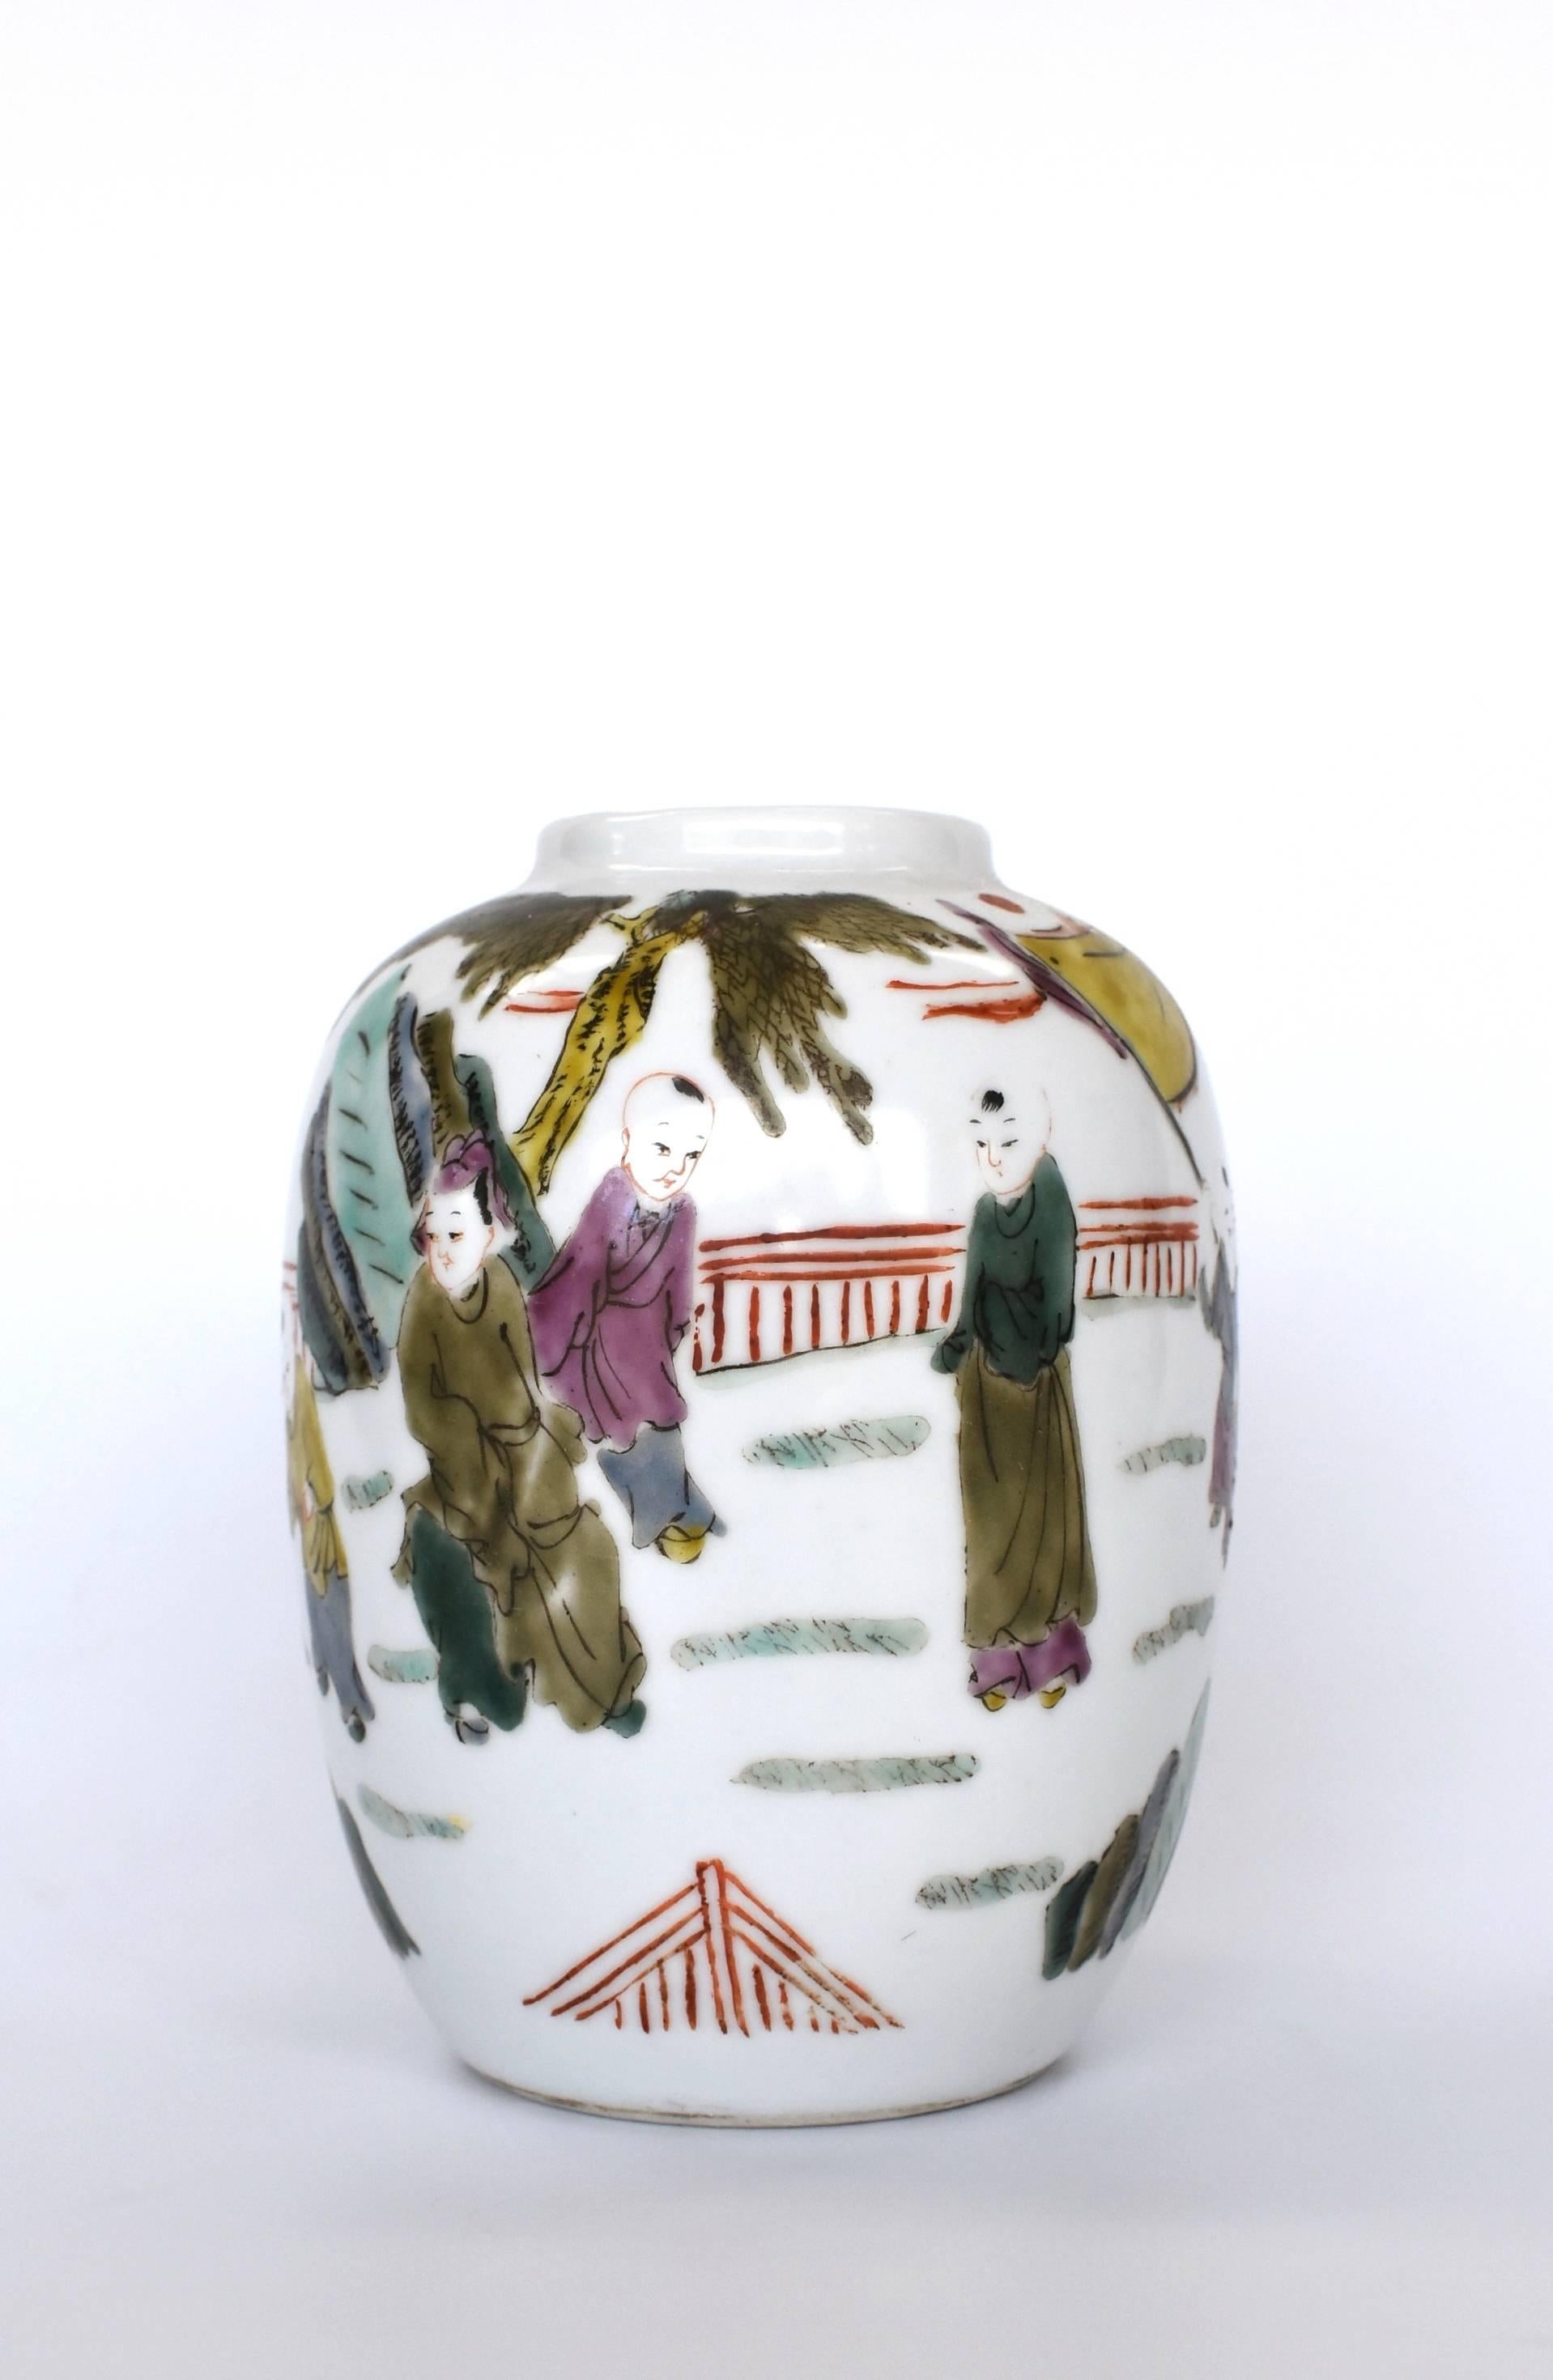 Hand-Painted Chinese Porcelain Vase, Republic Era, with Maker's Mark